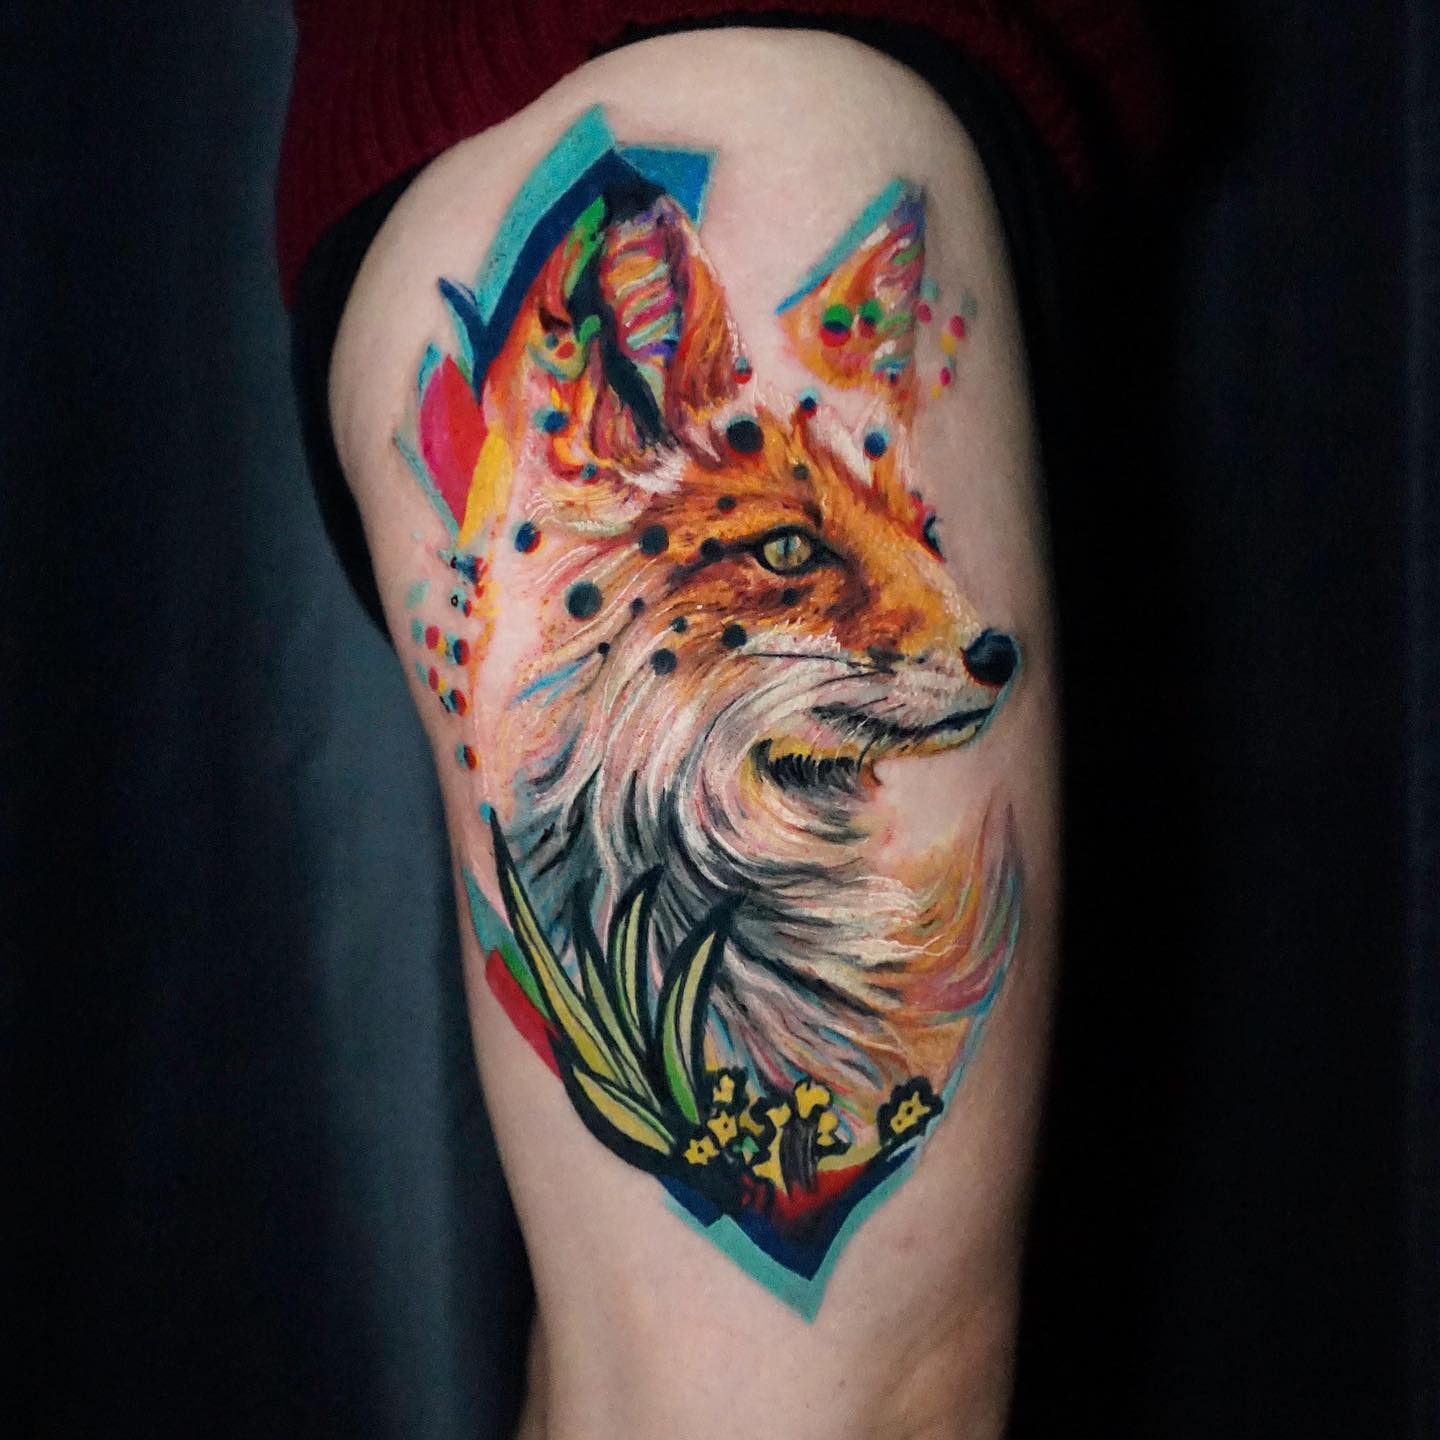 Tatuaje de zorro colorido y grande